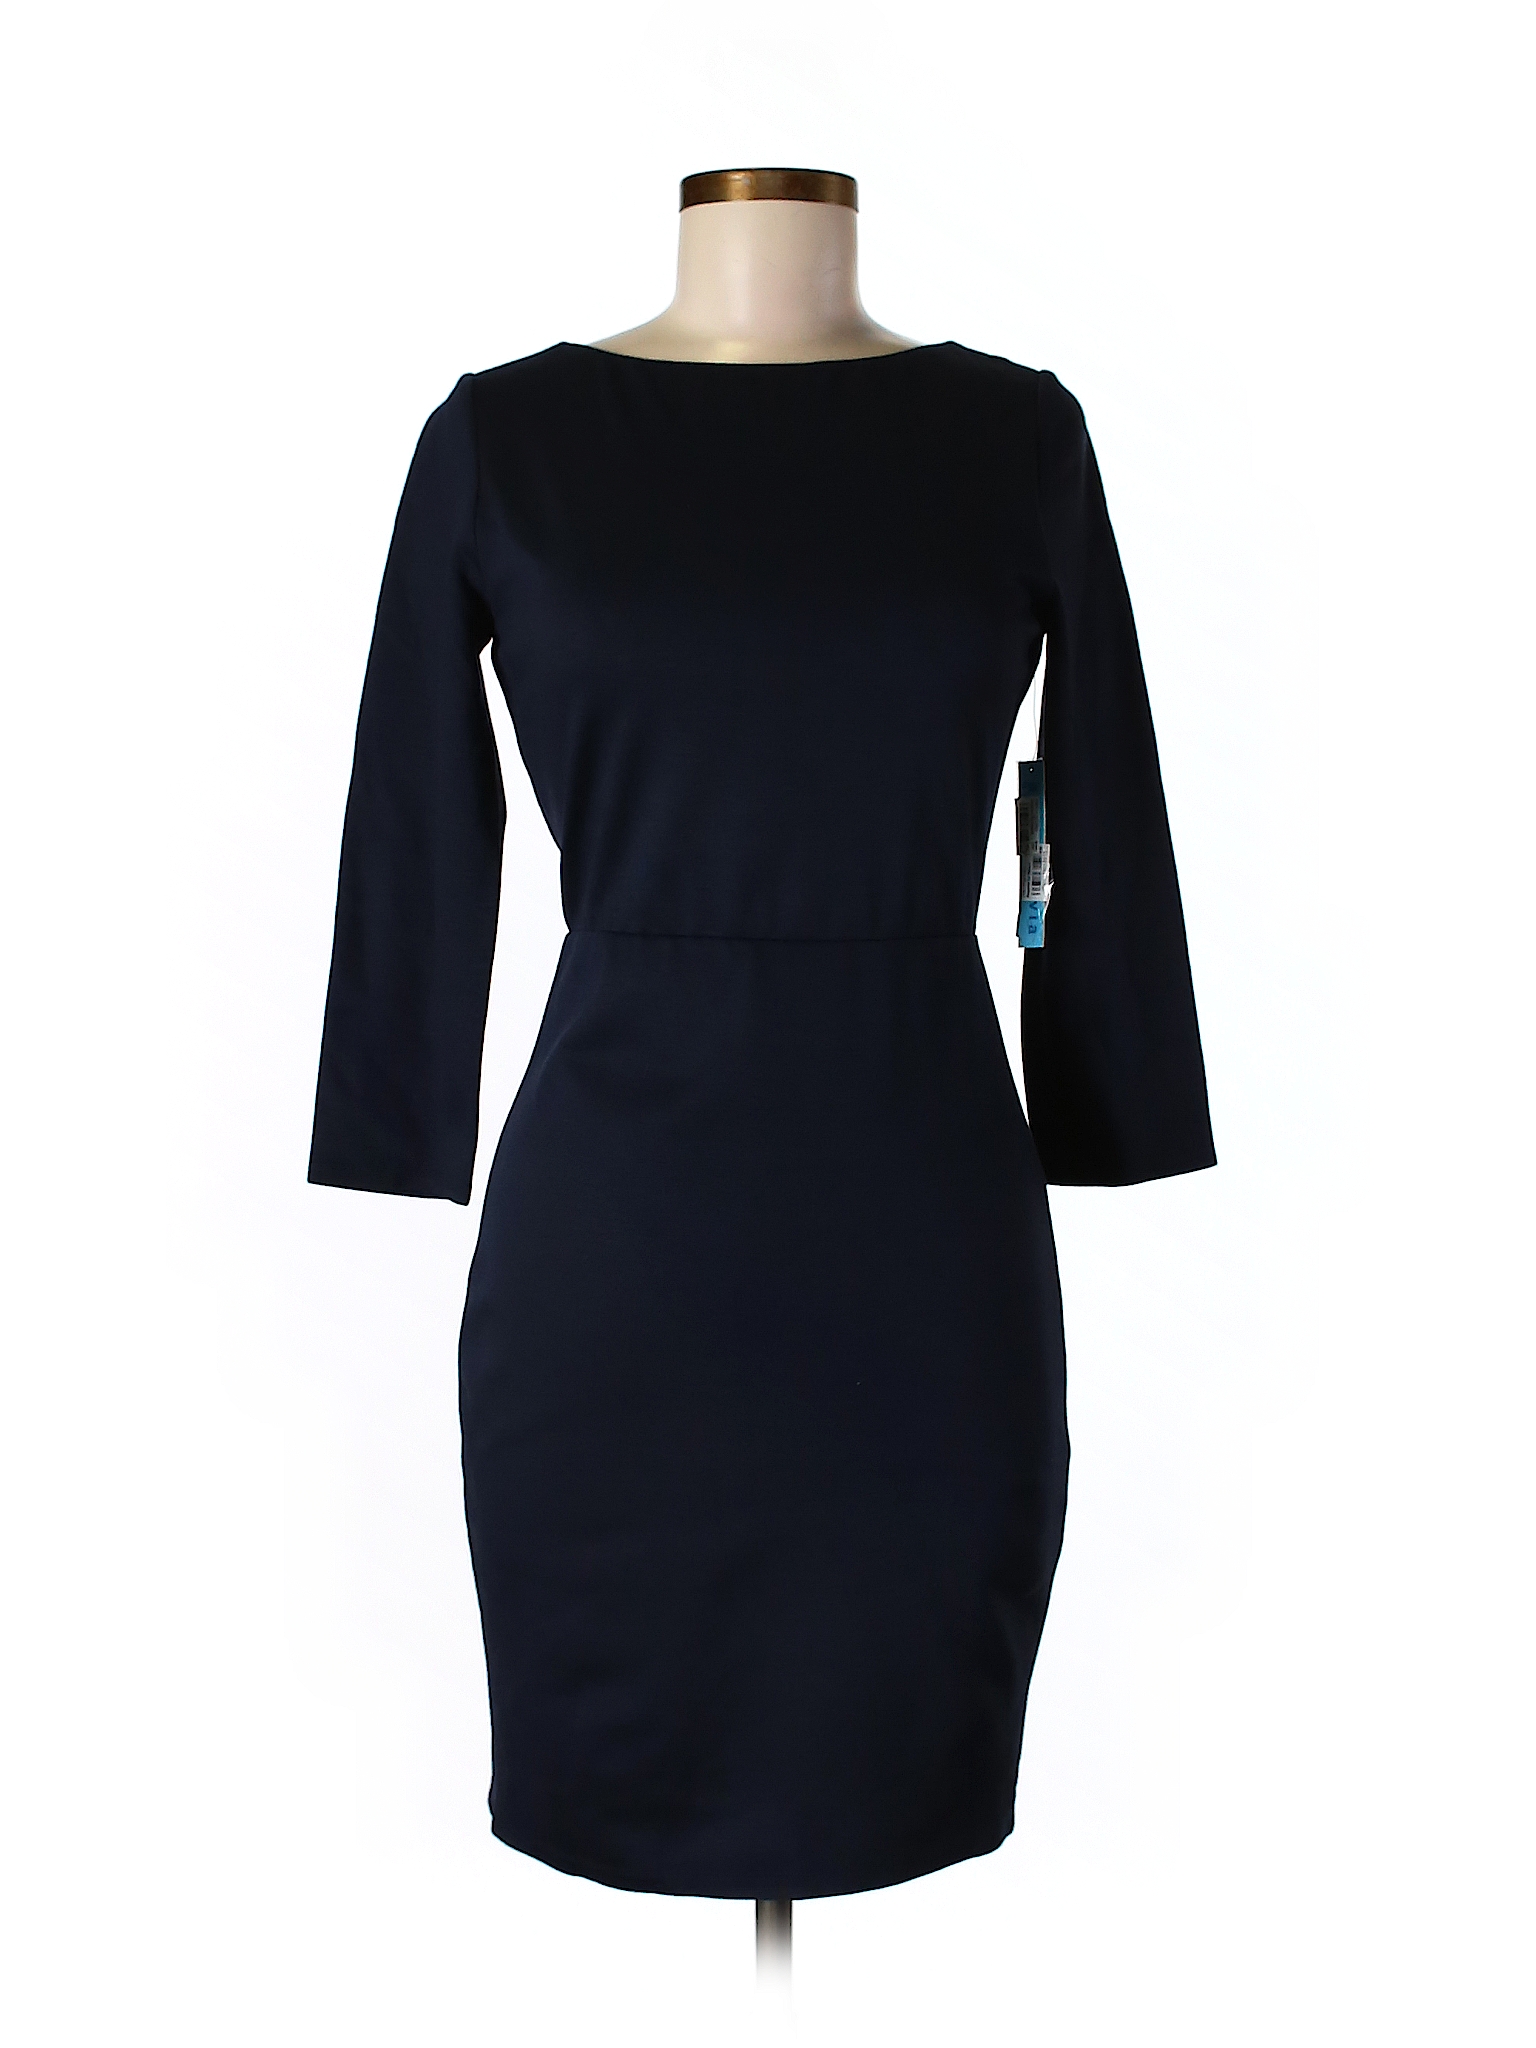 Alice + Olivia Solid Dark Blue Casual Dress Size 8 - 78% off | thredUP